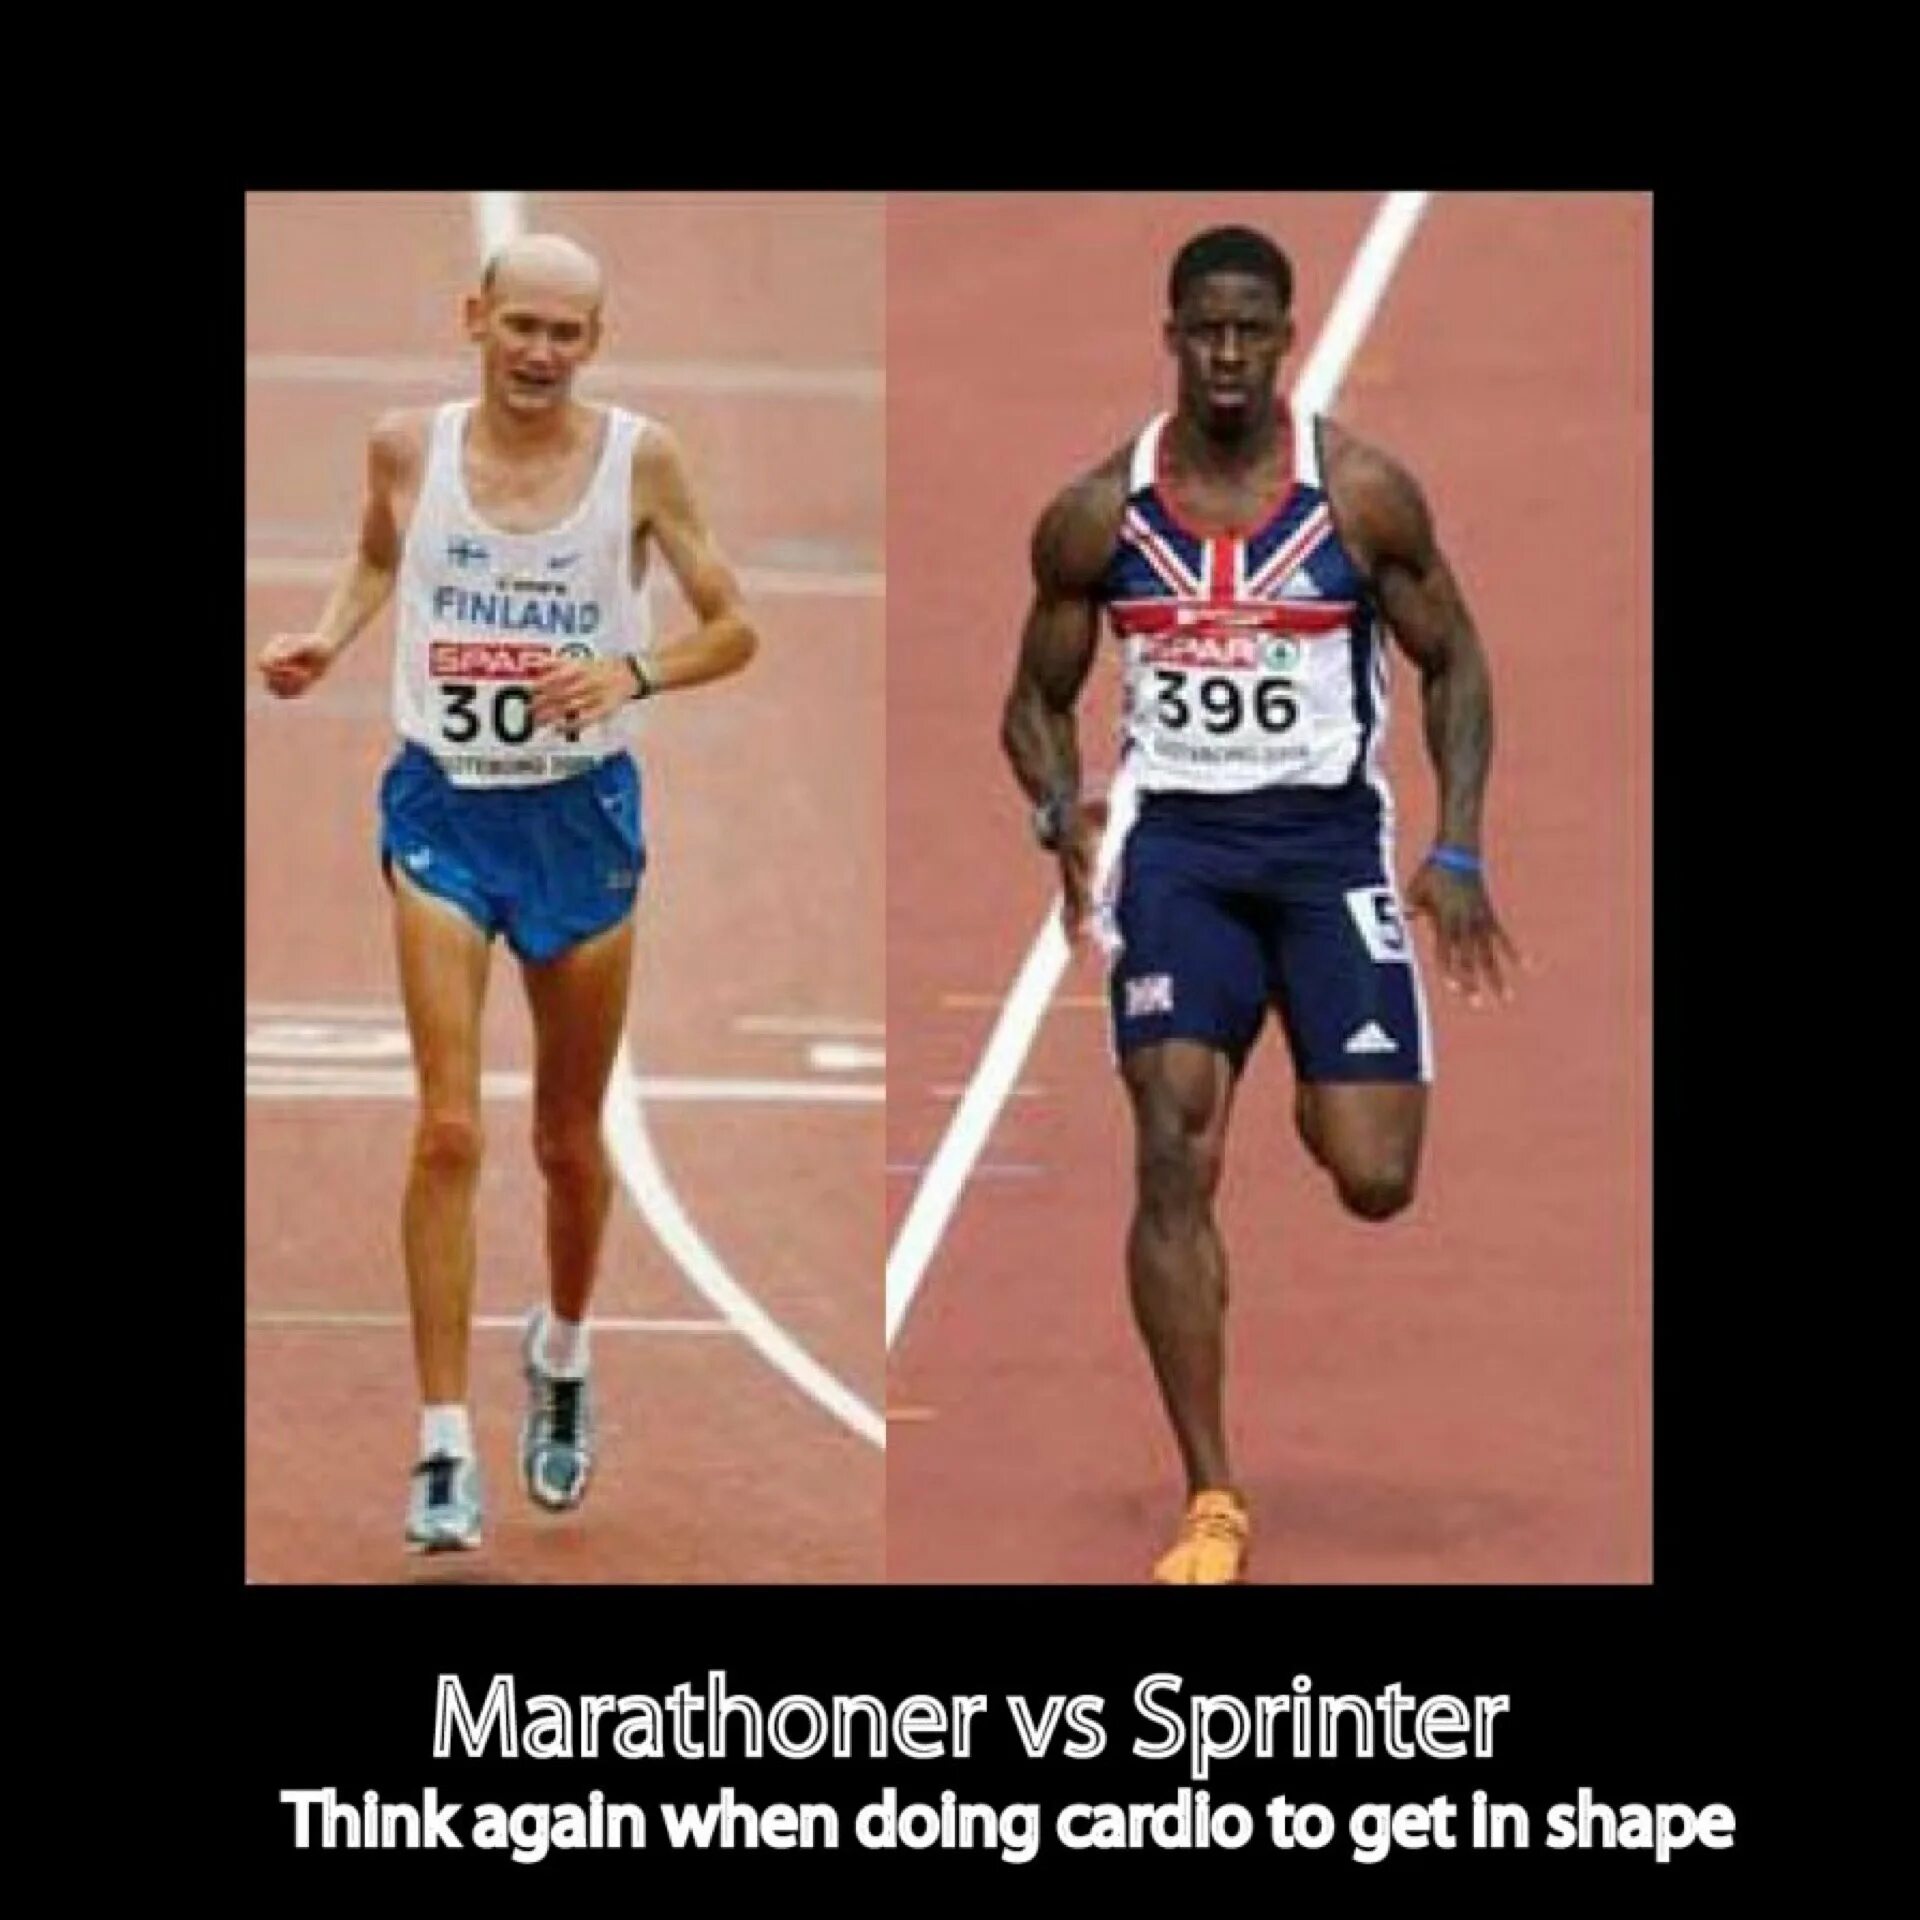 Спринтер и марафонец. Фигура спринтера и марафонца. Ноги спринтера и ноги марафонца. Бегуны спринтеры и марафонцы. Спринтер или марафонец